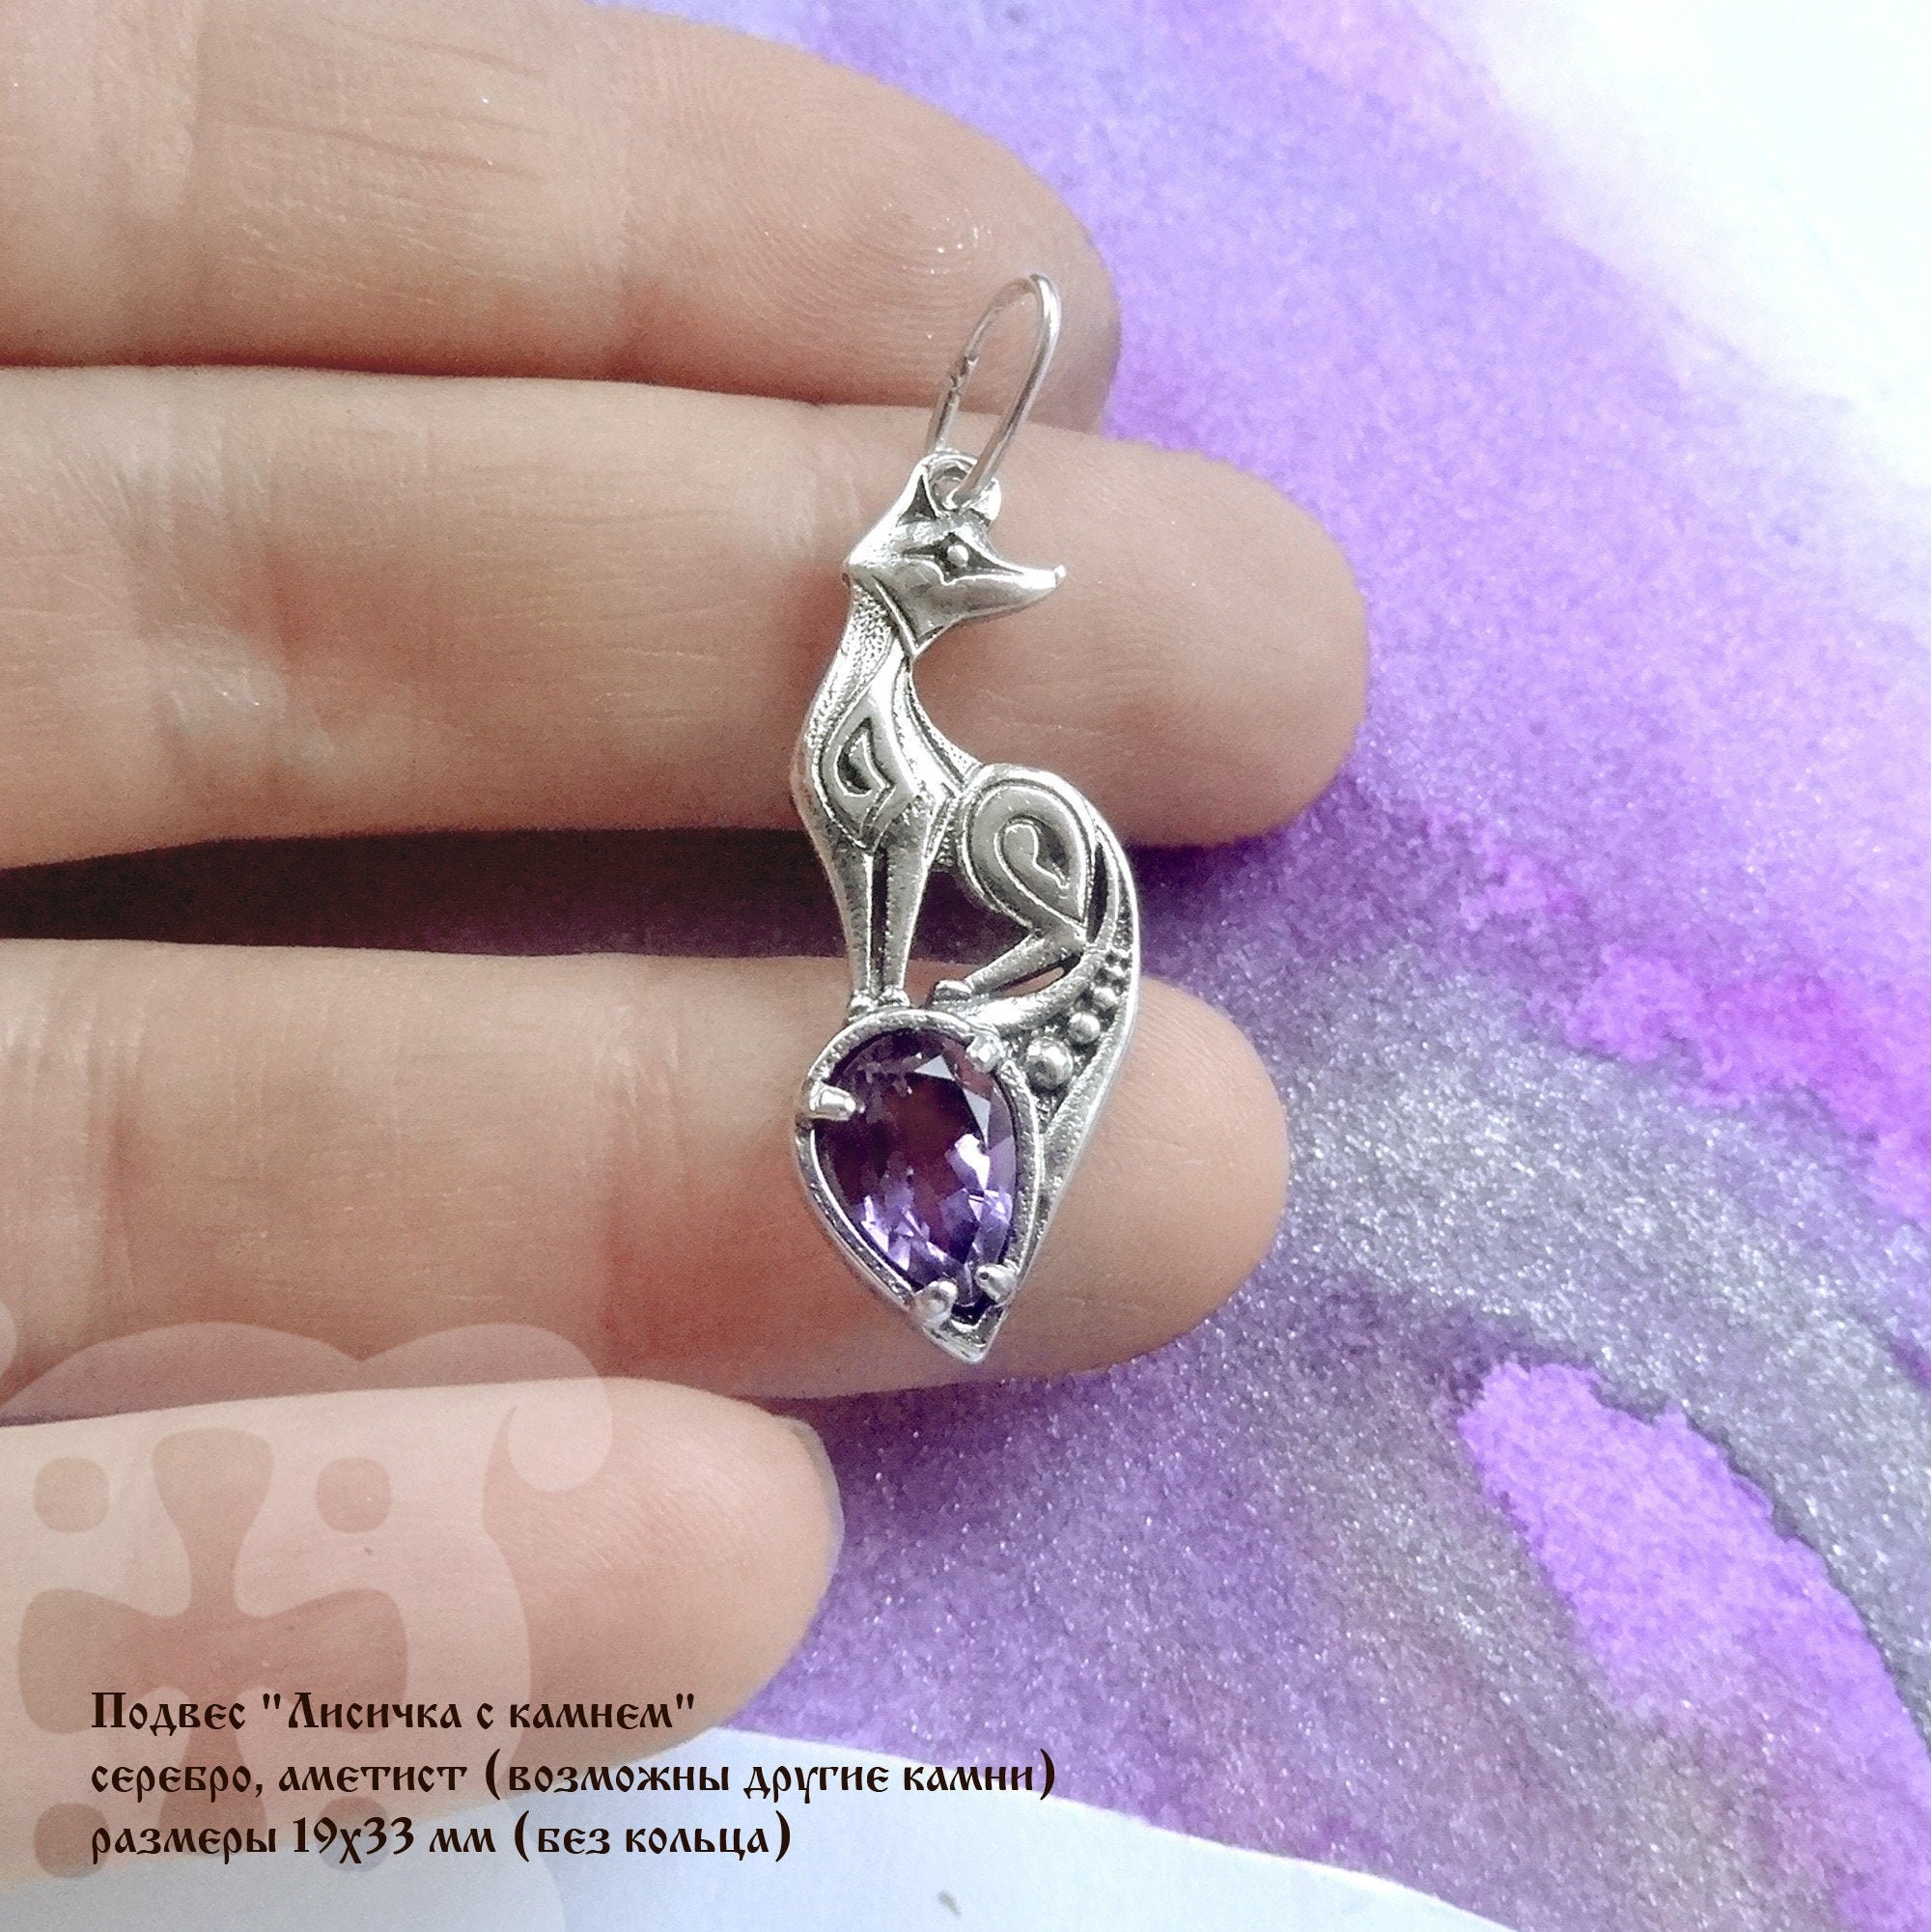 FOX Necklace With Gemstone Wicca Amulet Viking Pendant | Etsy